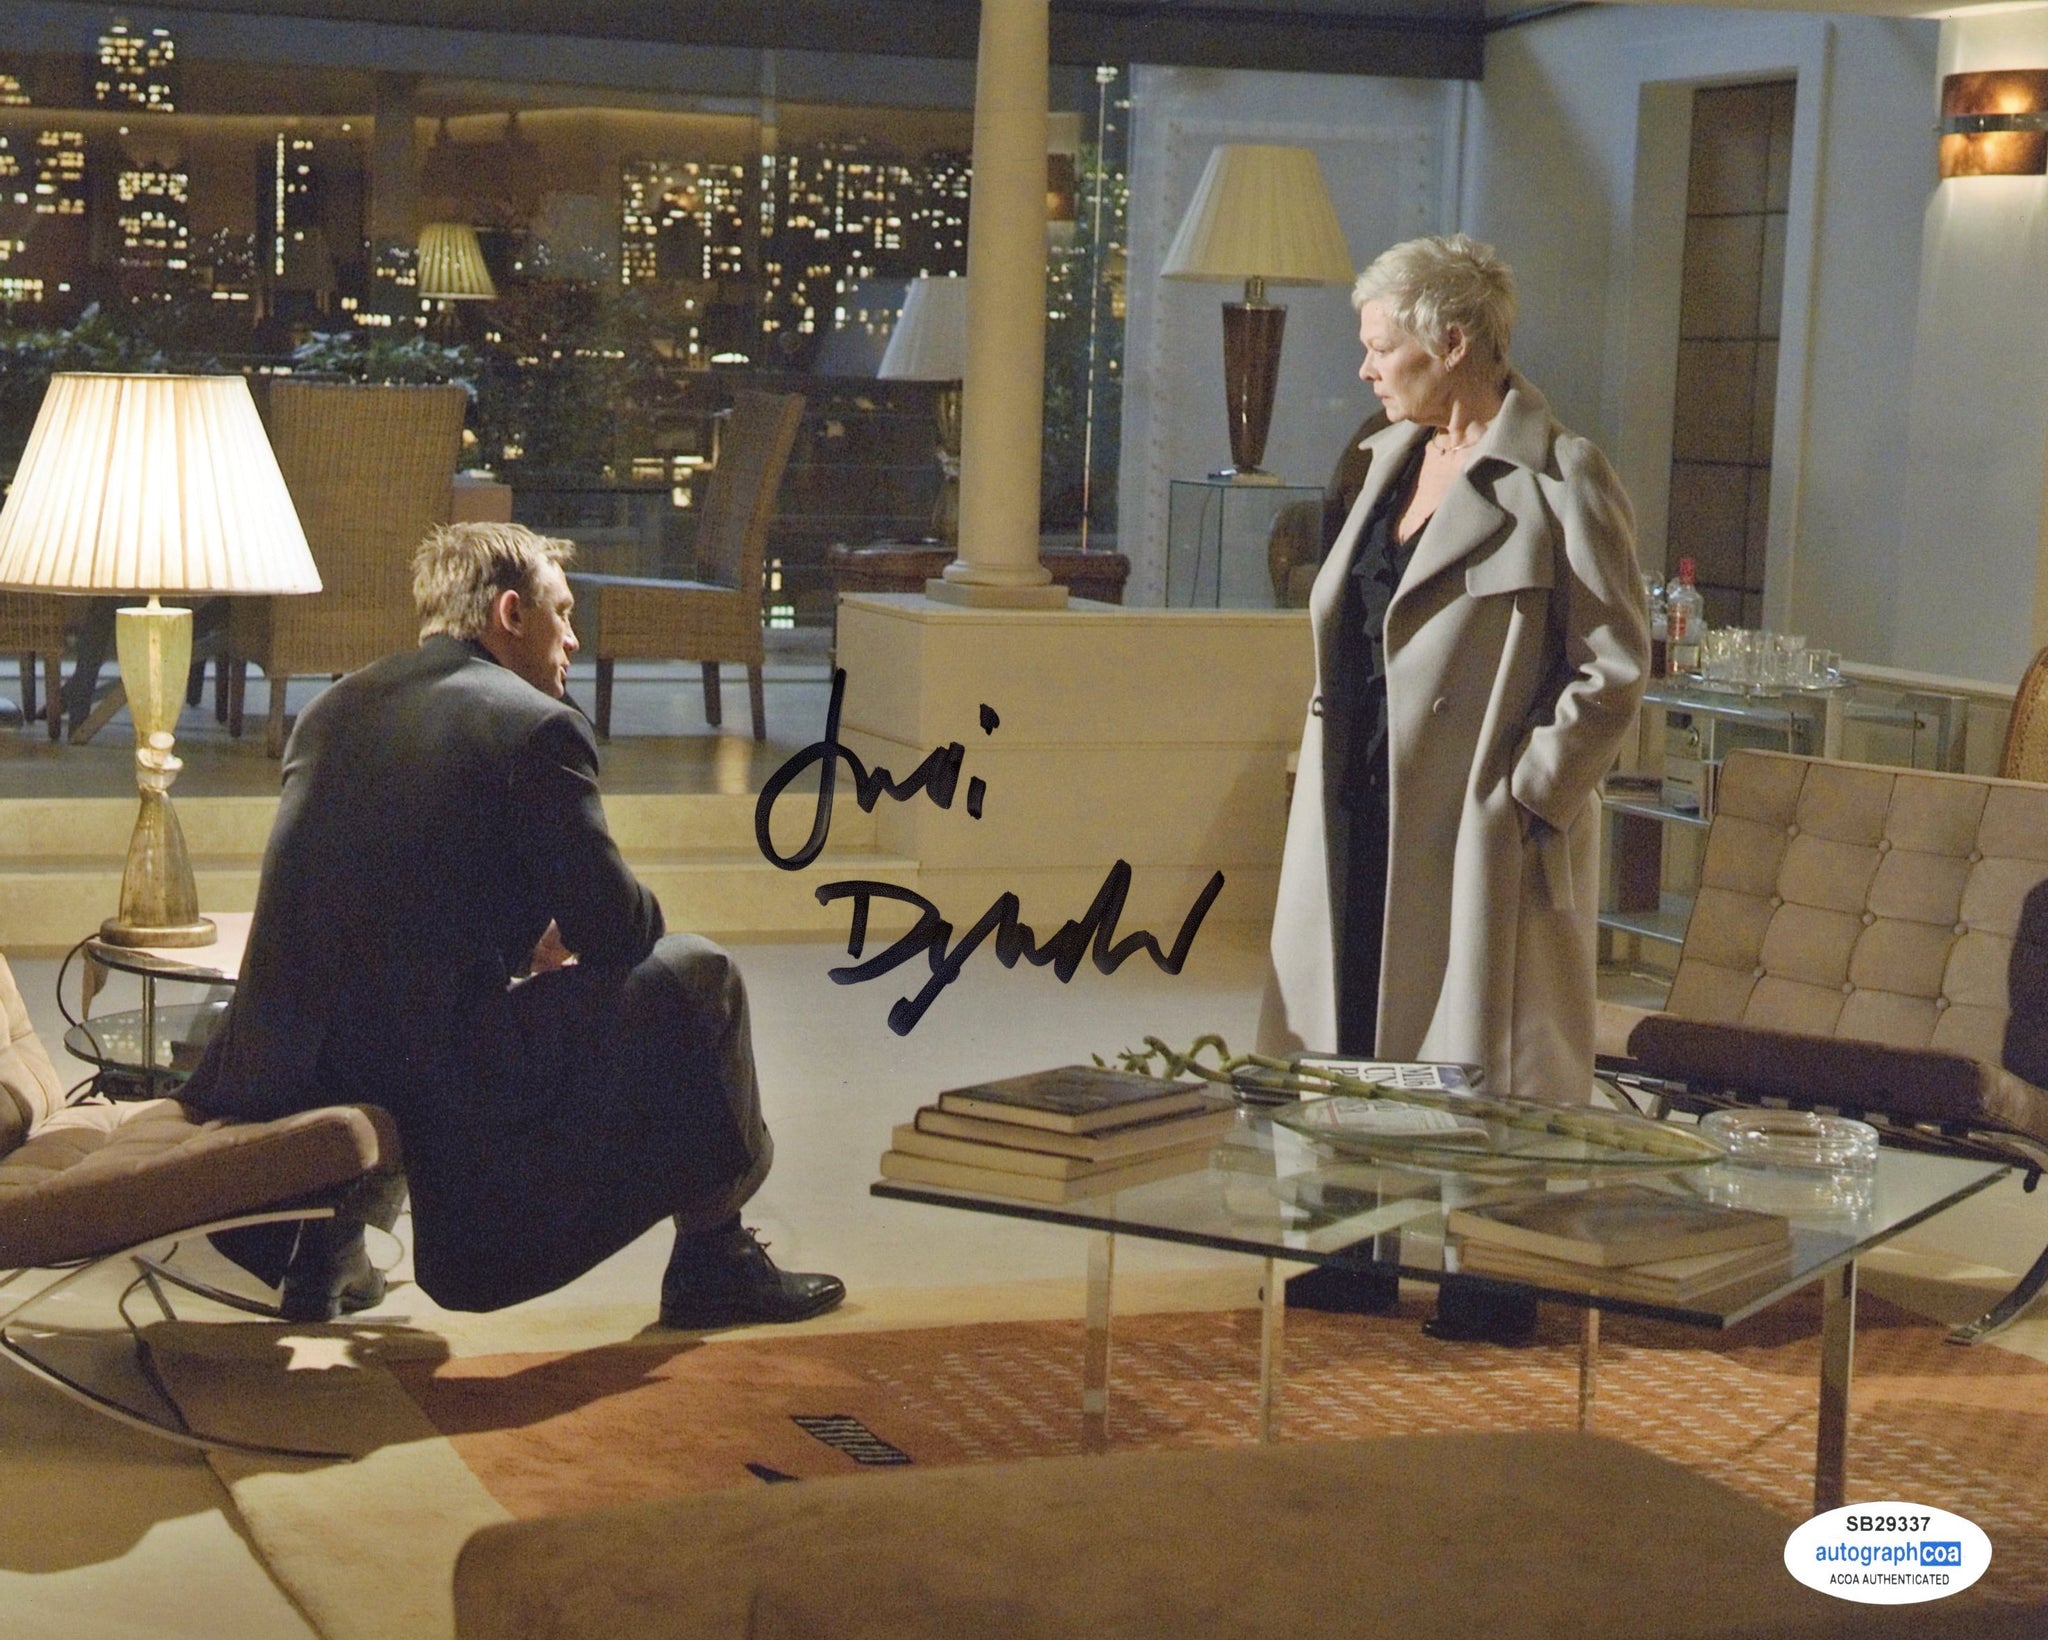 Judi Dench Skyfall Bond Signed Autograph 8x10 Photo ACOA